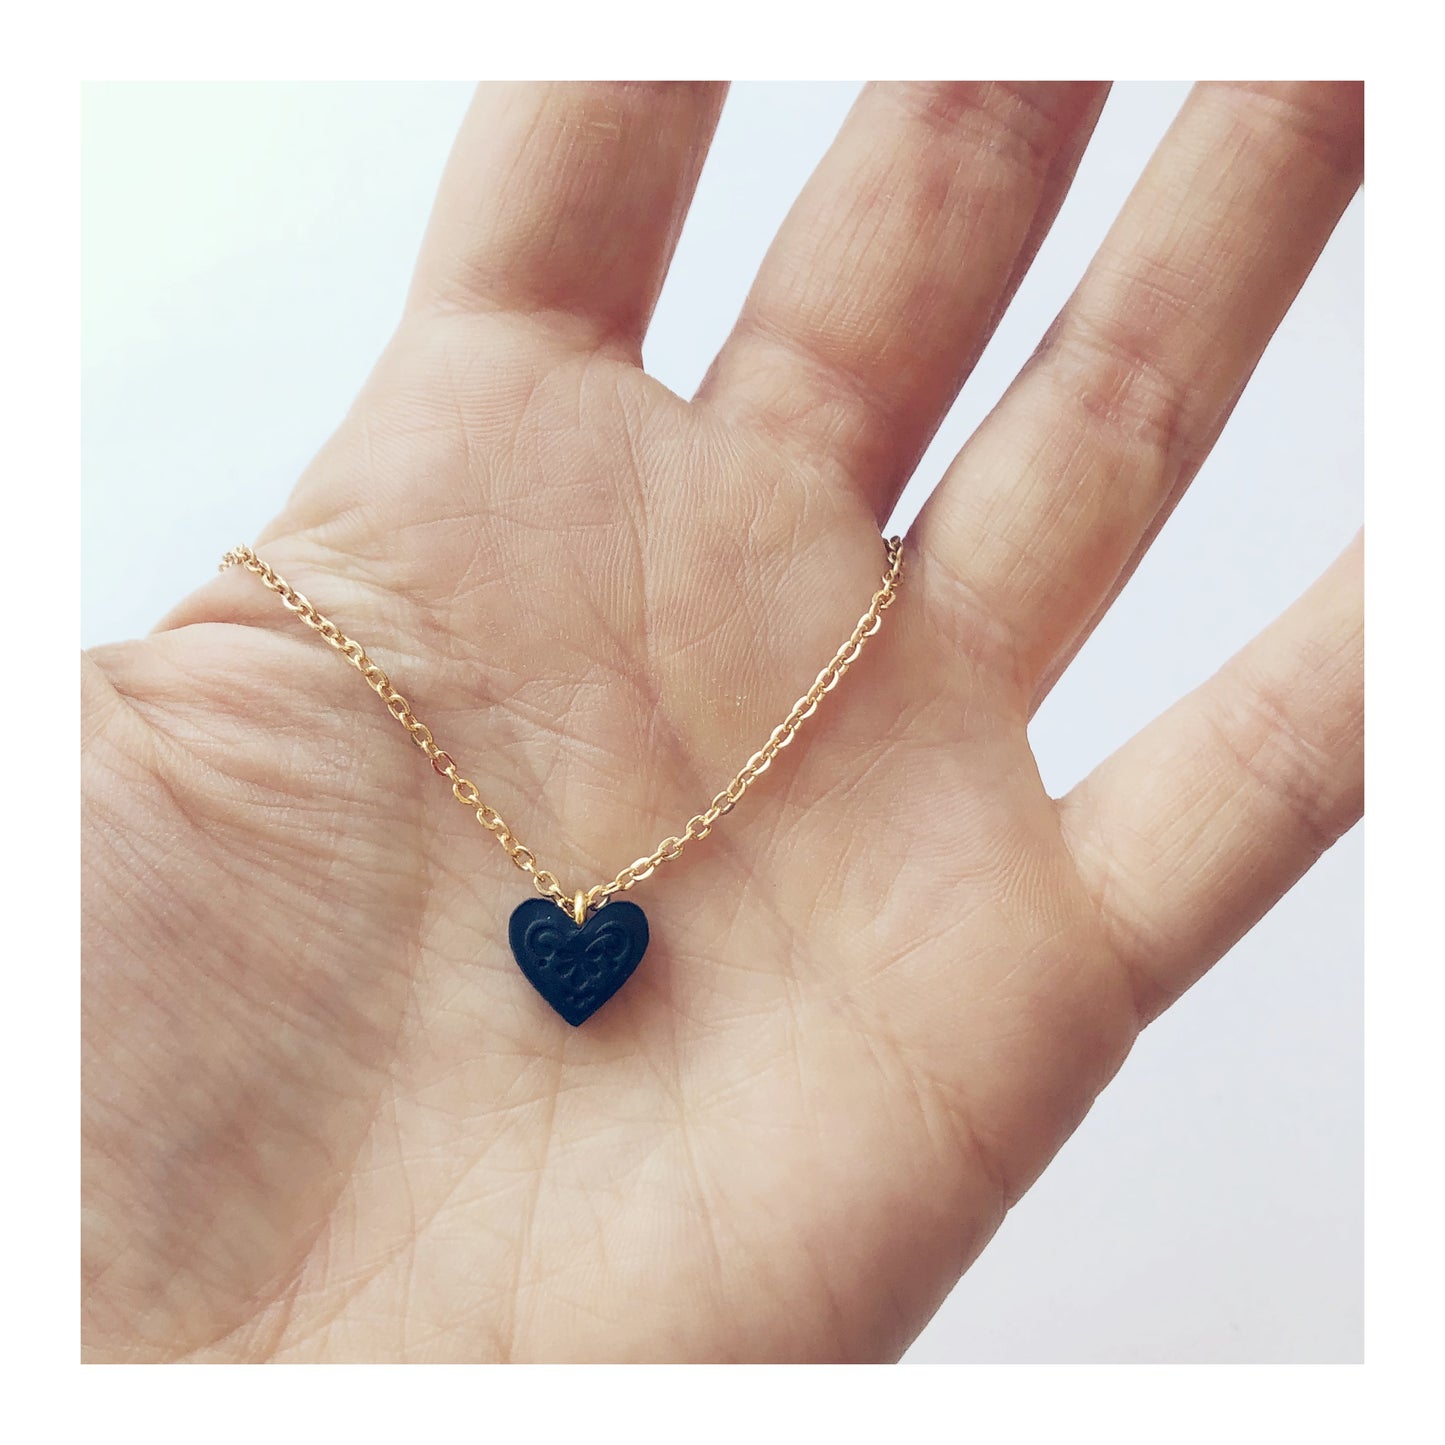 SWEET BLACK HEART .  pendant